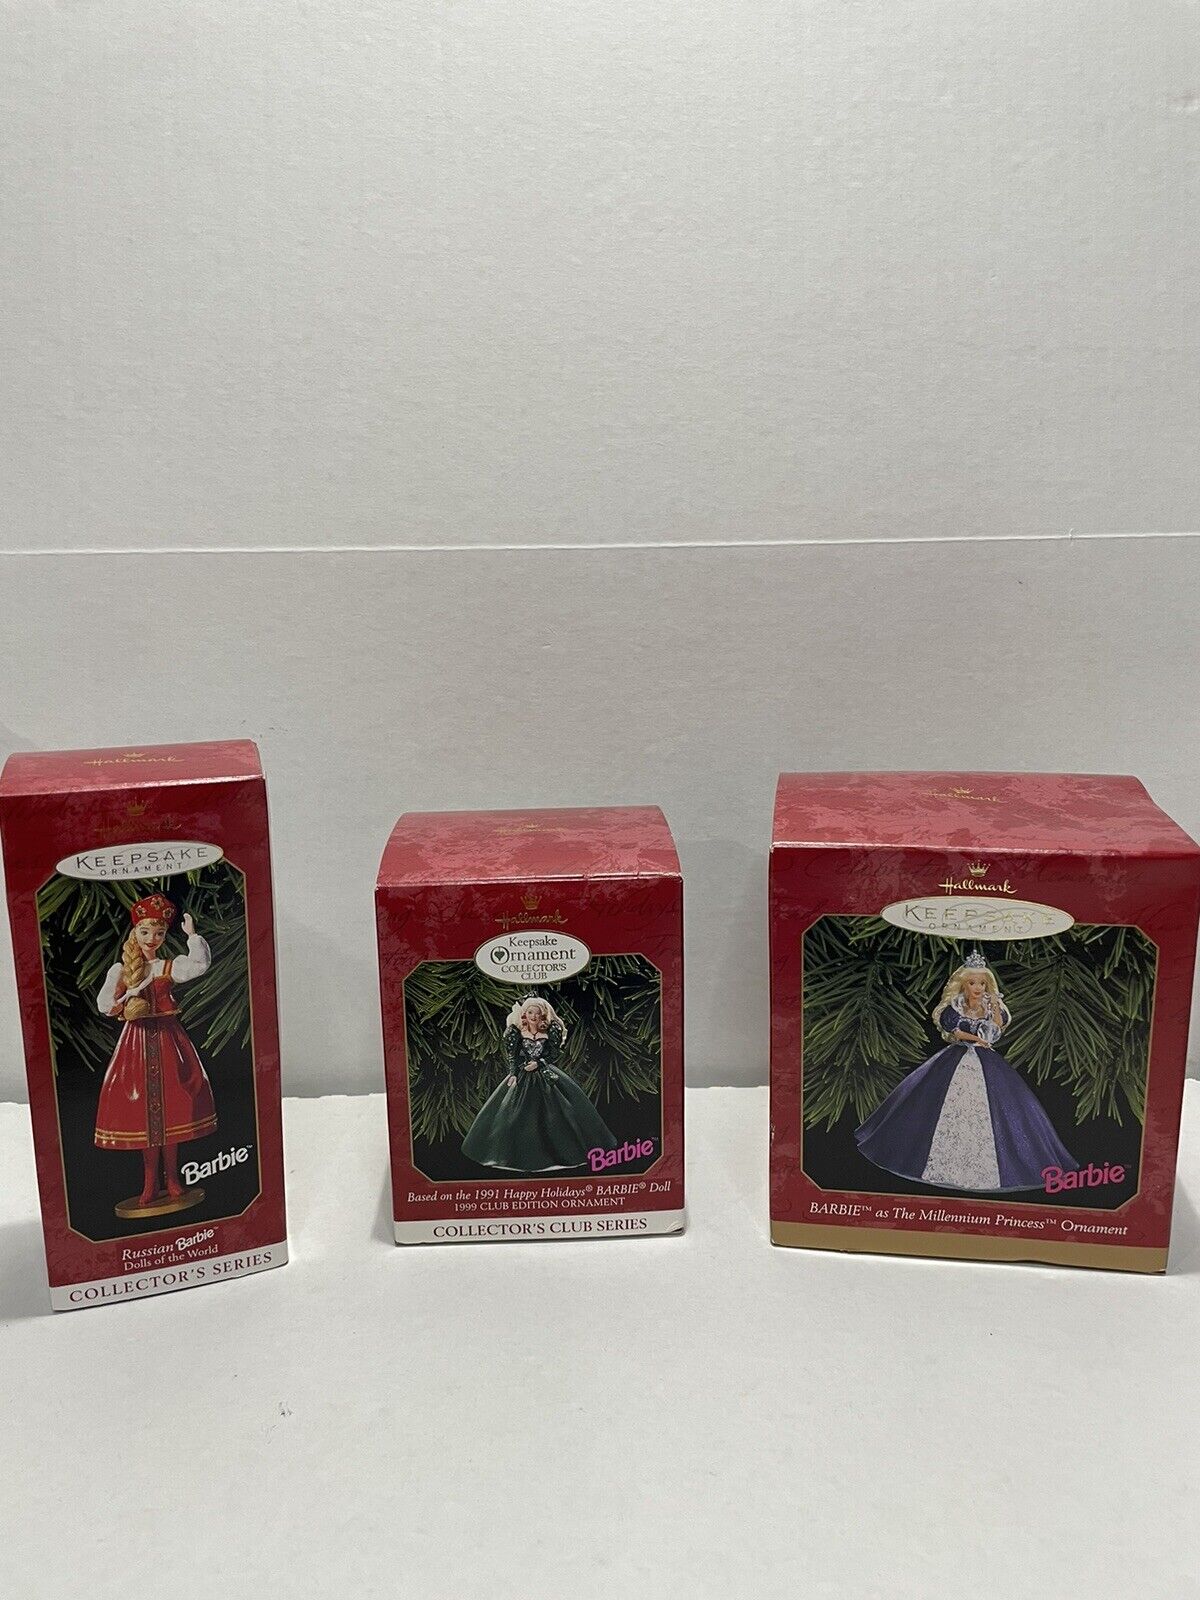 Vintage Hallmark Keepsake Ornaments Lot Of 3 Barbie Doll Themed New In Box